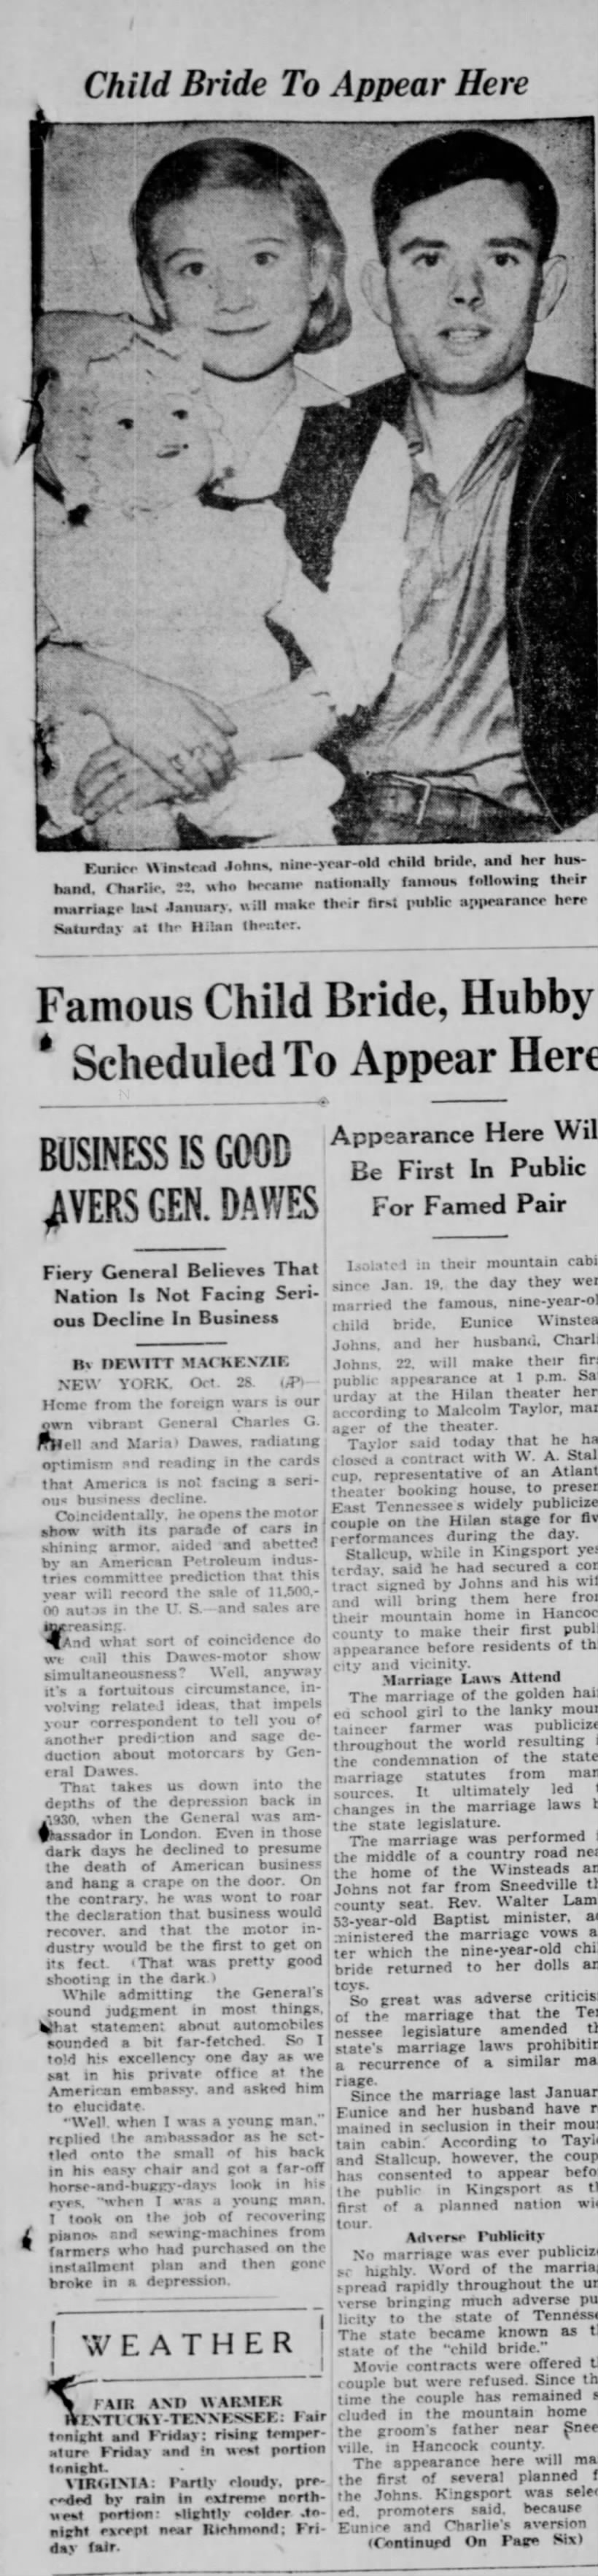 Child Bride-Hancock County Tenn.
Eunice Winstead, age 9 
married to Charlie Johns age 22.